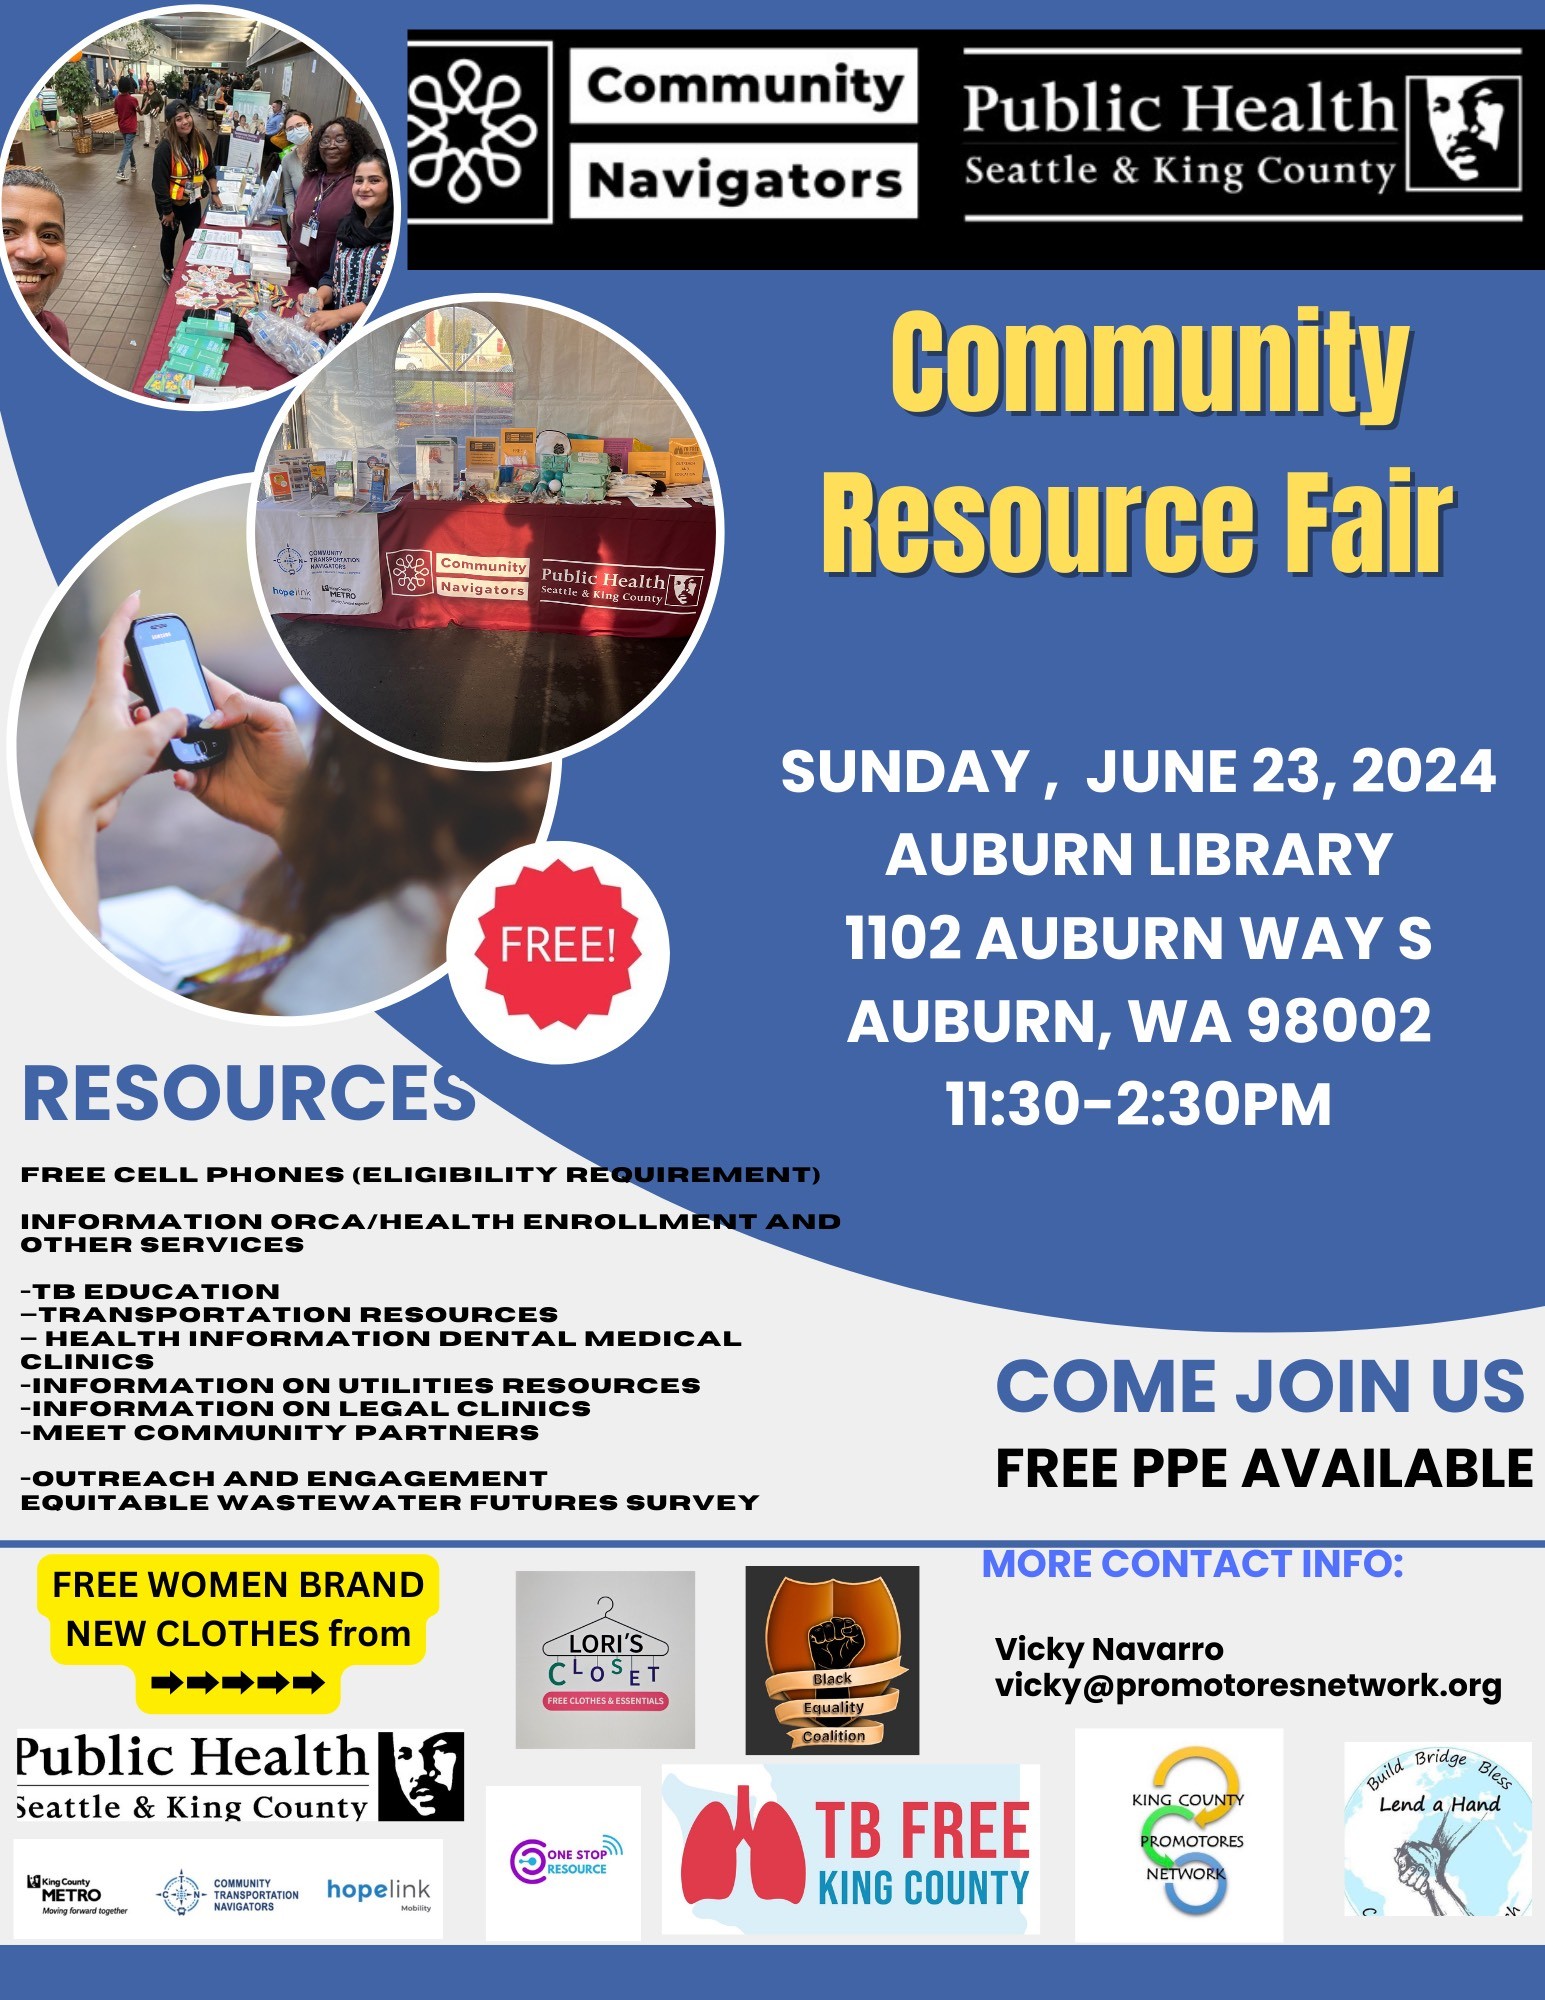 Community Resource Fair Auburn Library June 23, 2024